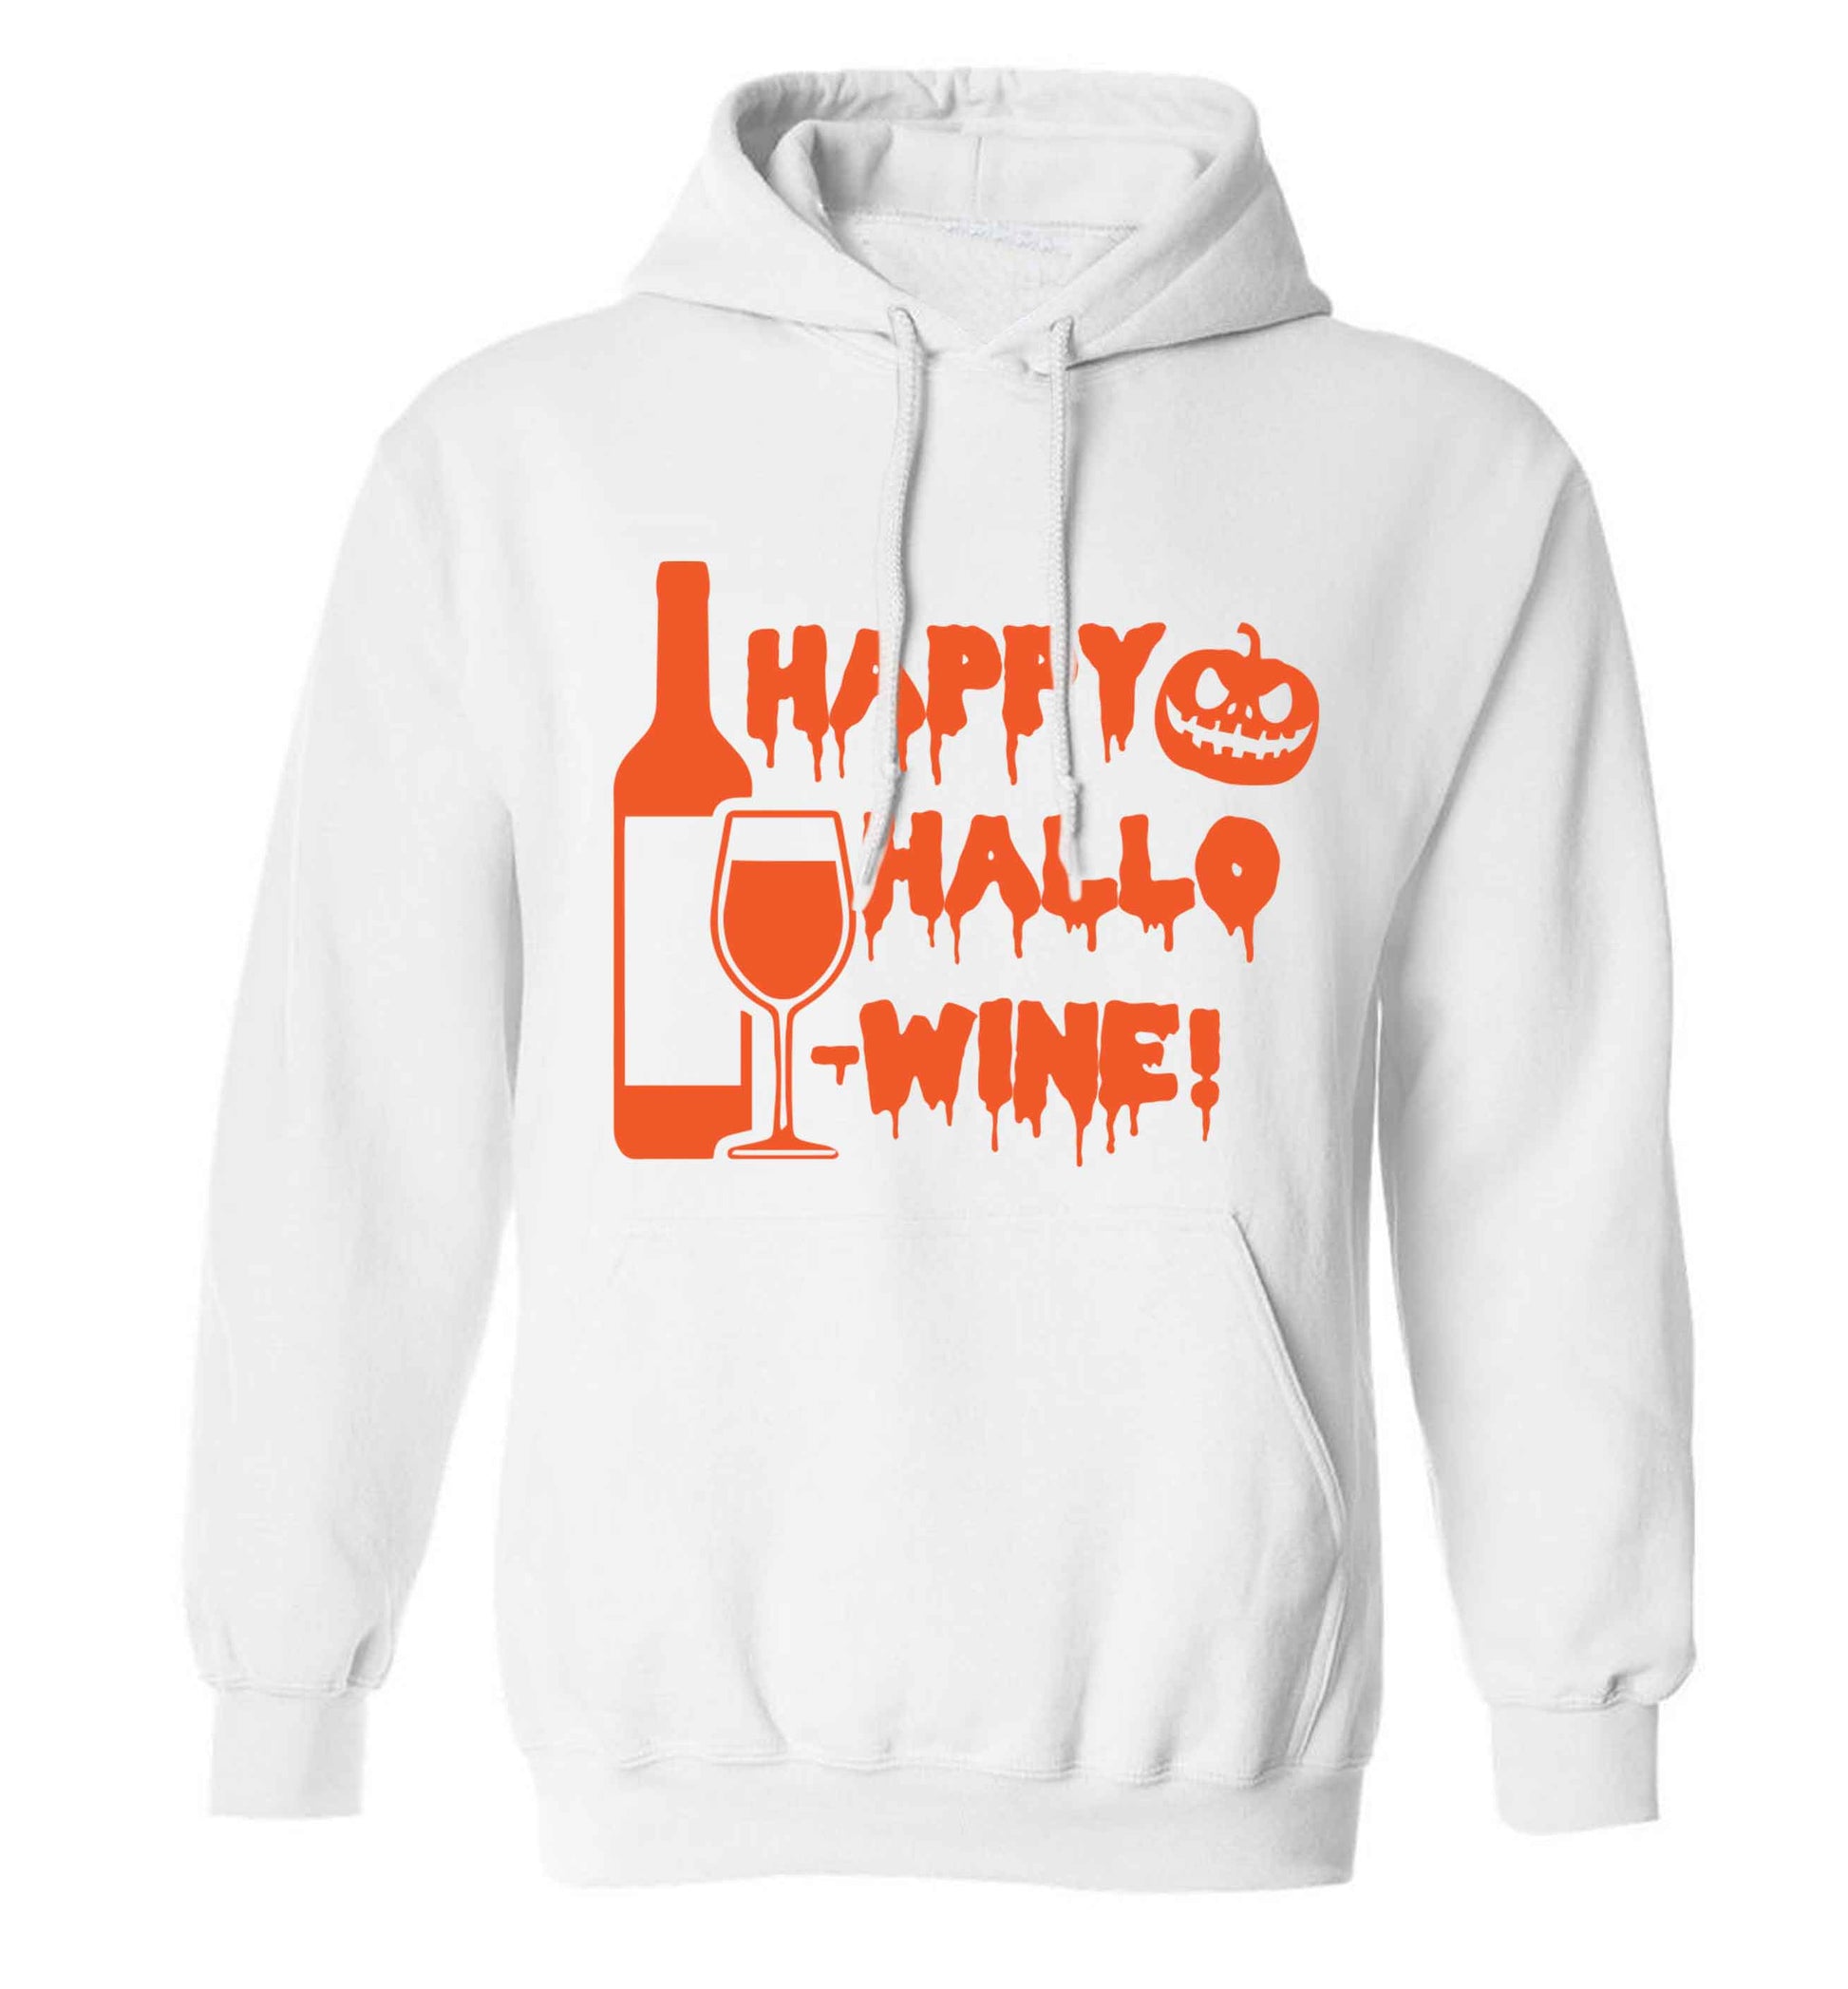 Happy hallow-wine adults unisex white hoodie 2XL